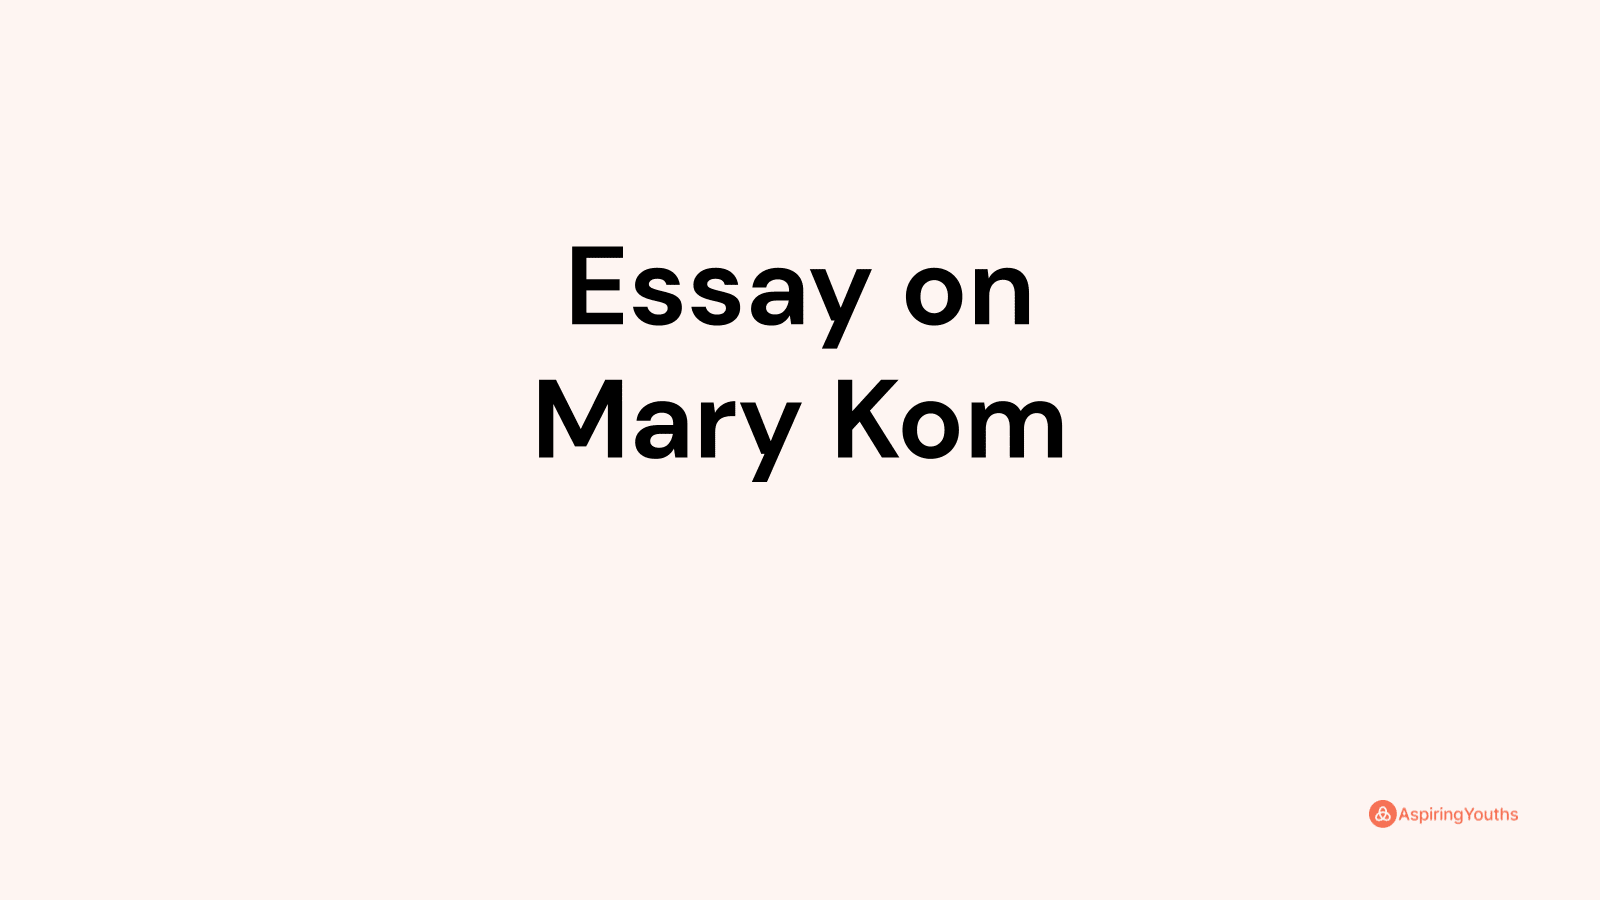 essay on mary kom in 150 words